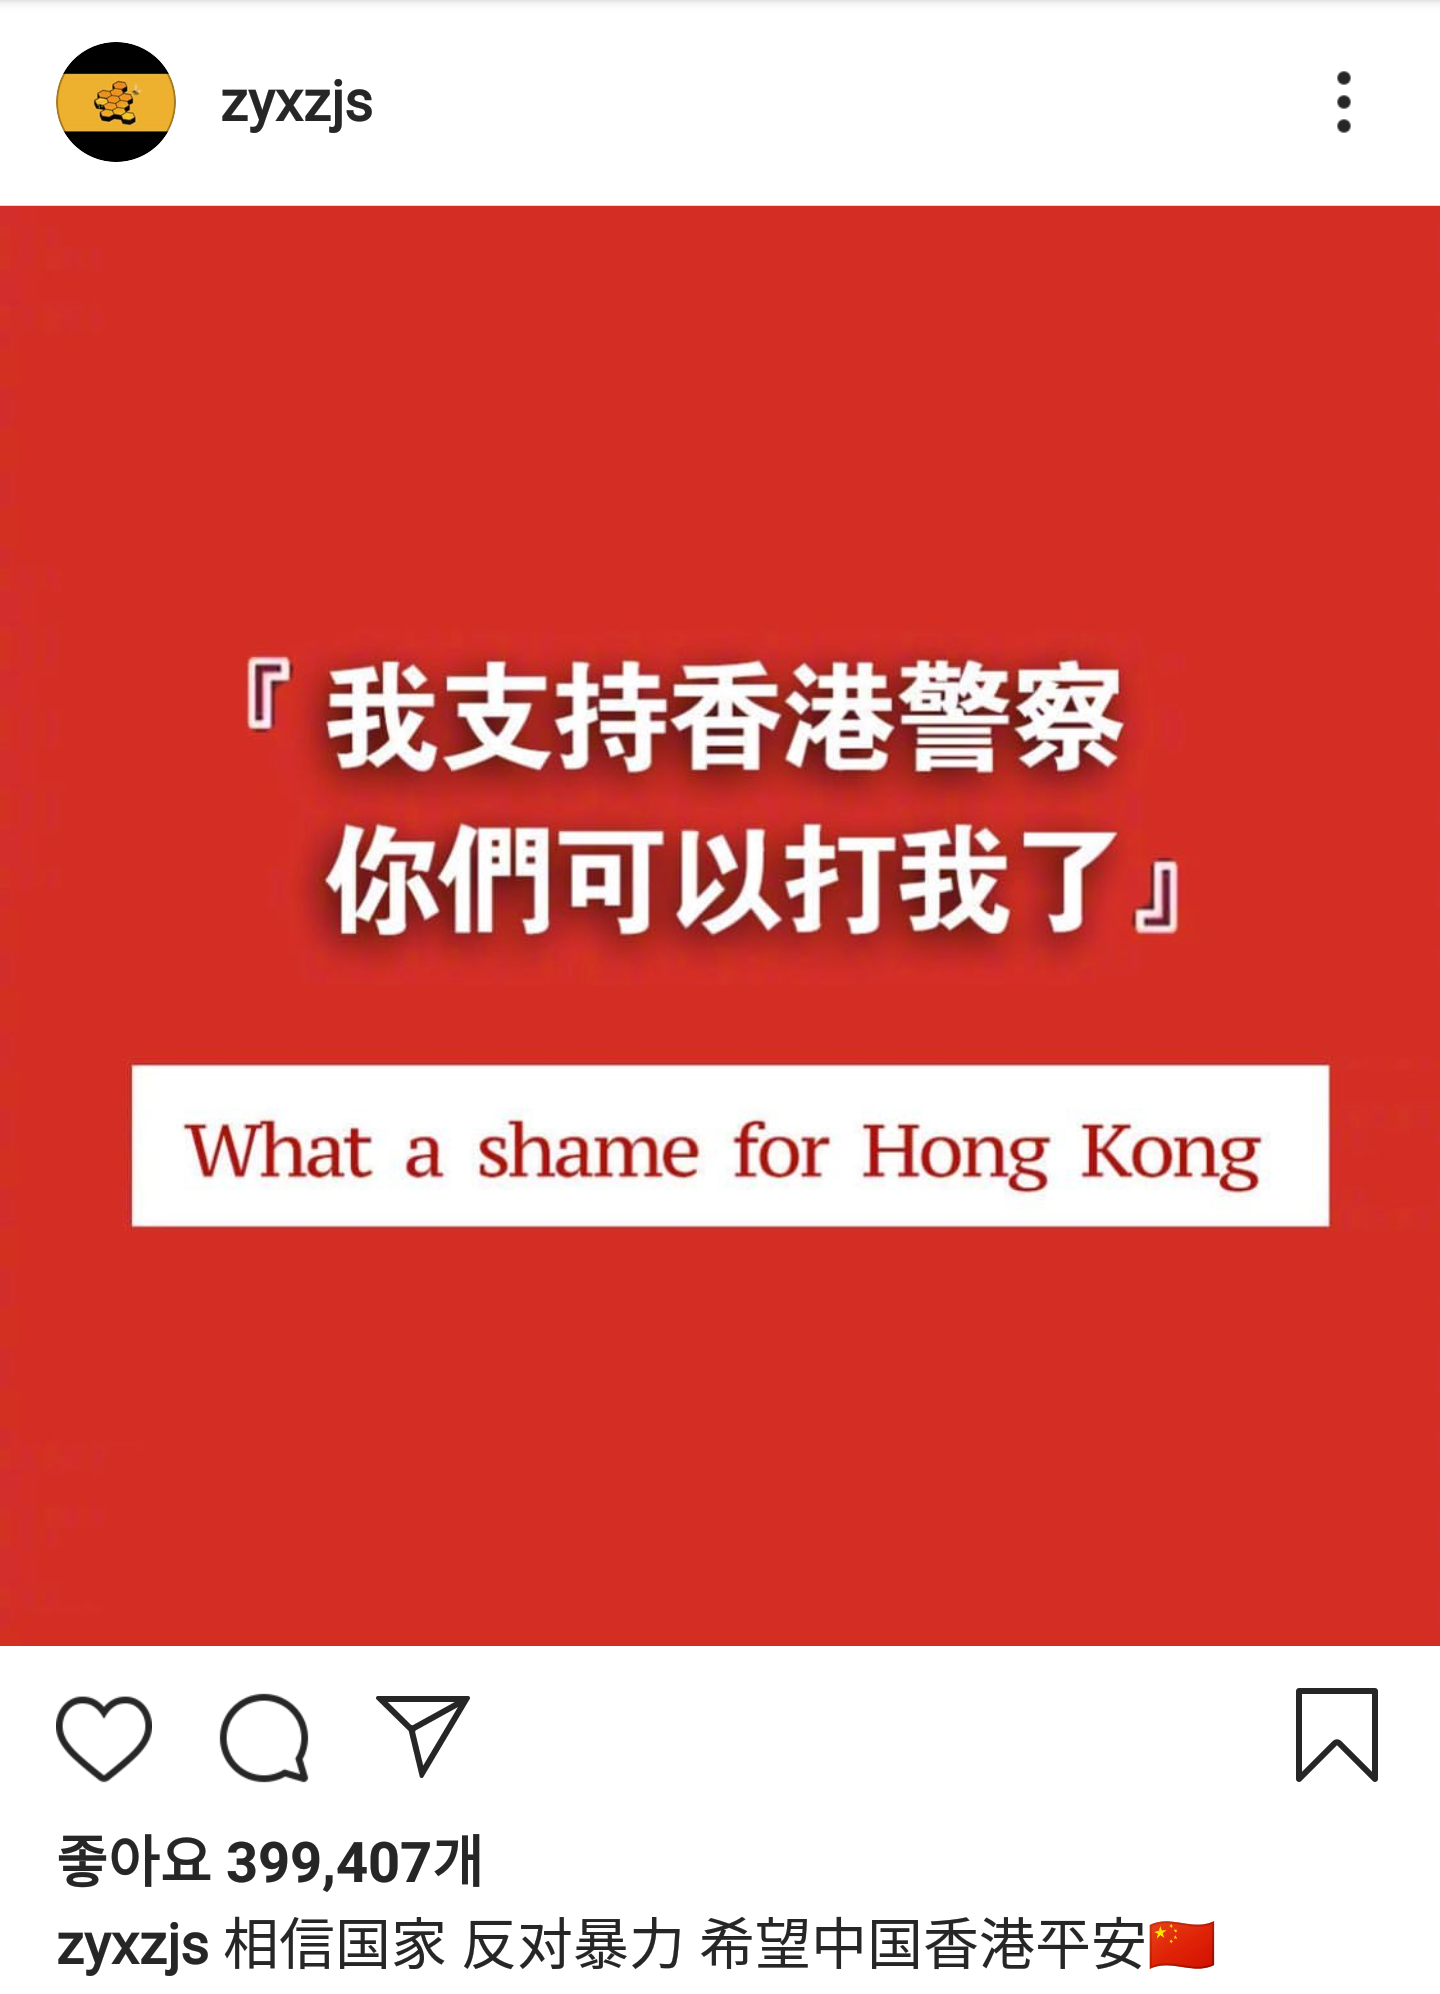 SNS에서 확산 중인 중국 정부를 지지하는 문구로 하단에는 “국가를 신뢰하고 폭력을 반대하며 중국과 홍콩의 평안을 희망한다”고 쓰여 있다. 엑소 멤버 레이의 인스타그램 캡처